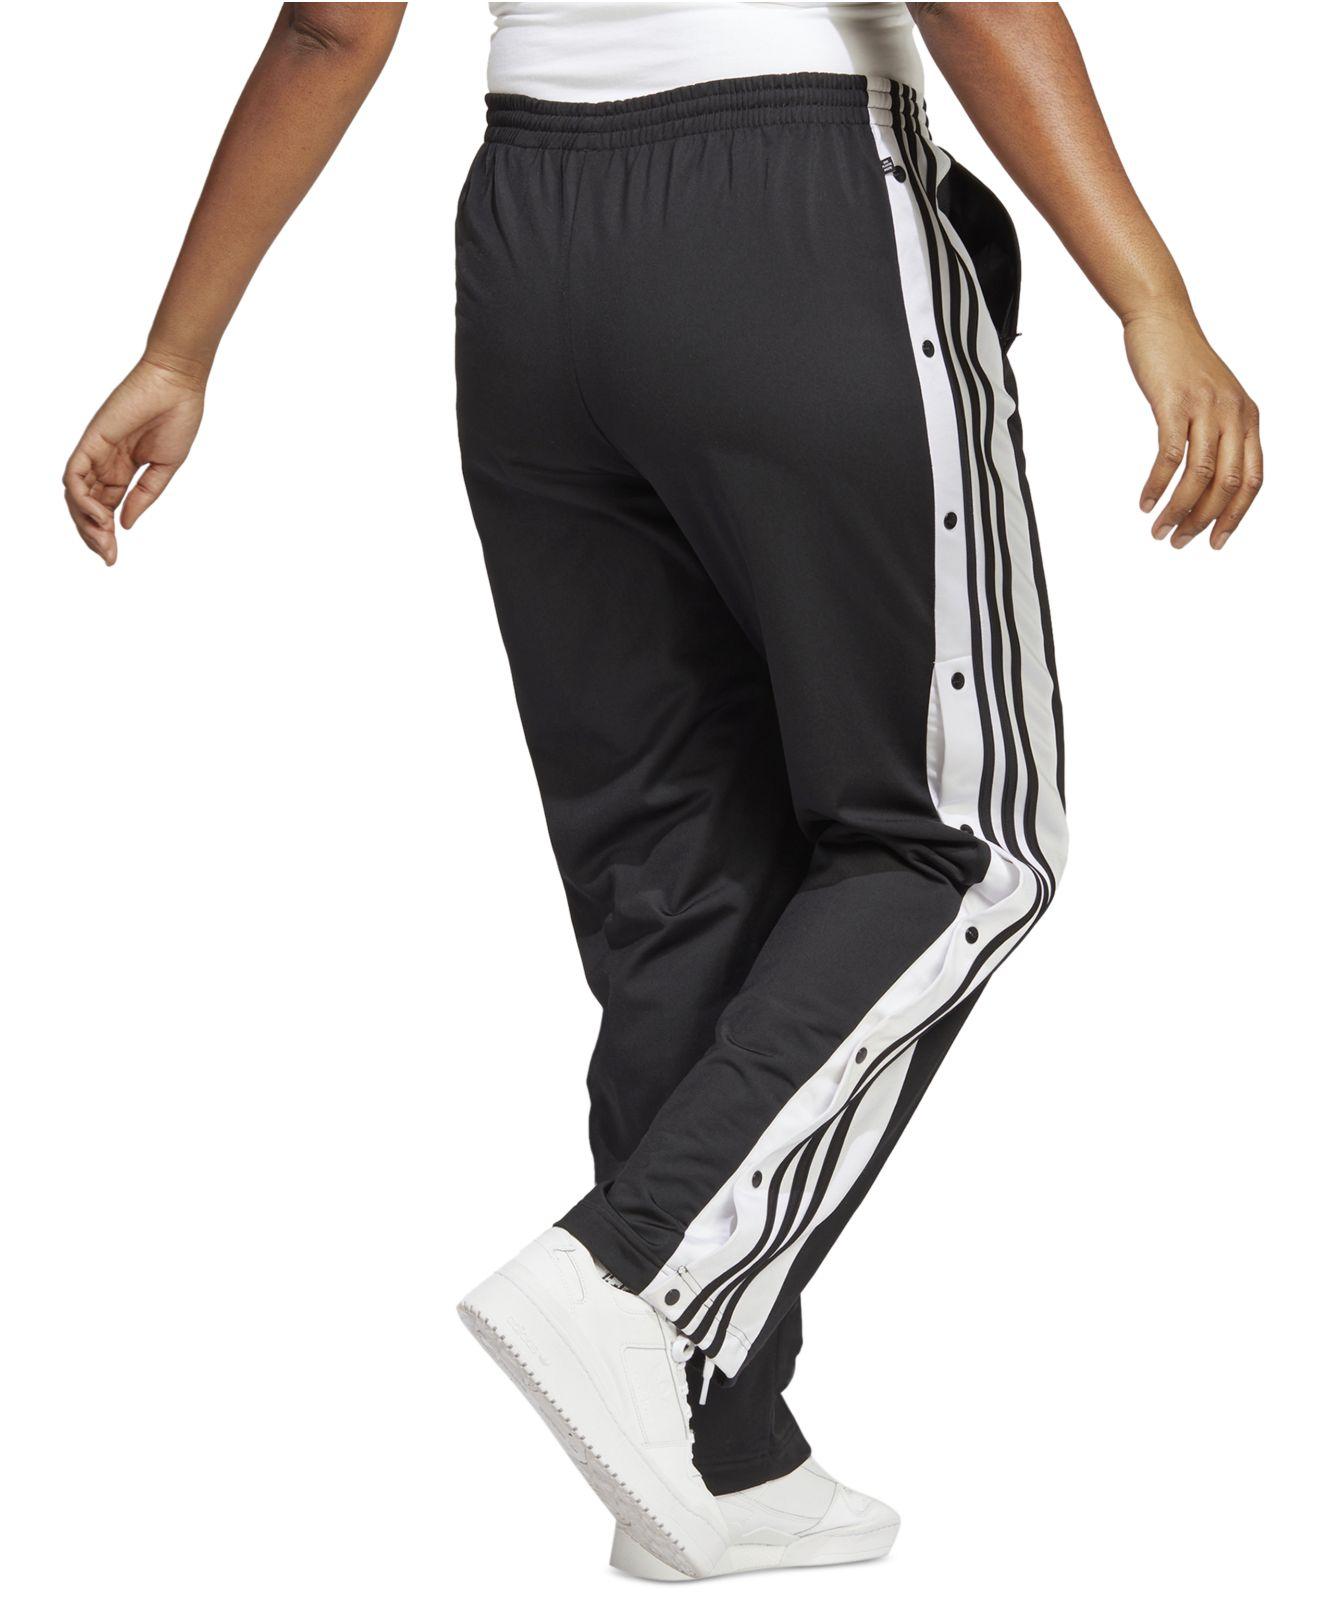 adidas Originals Plus Size Adibreak 3-stripes Snap-leg Joggers in Black |  Lyst